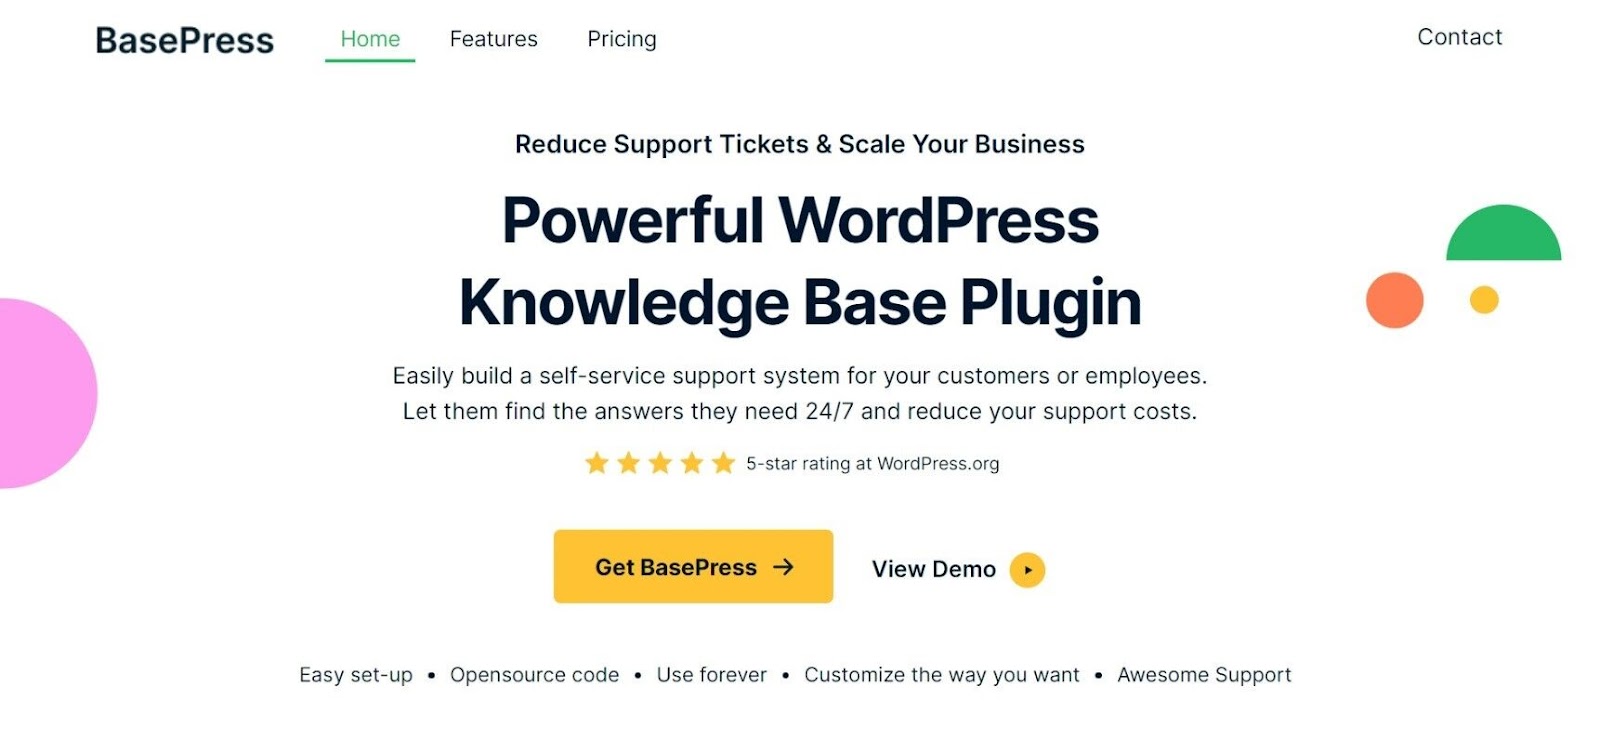 BasePress WordPress Knowledge Base Plugin